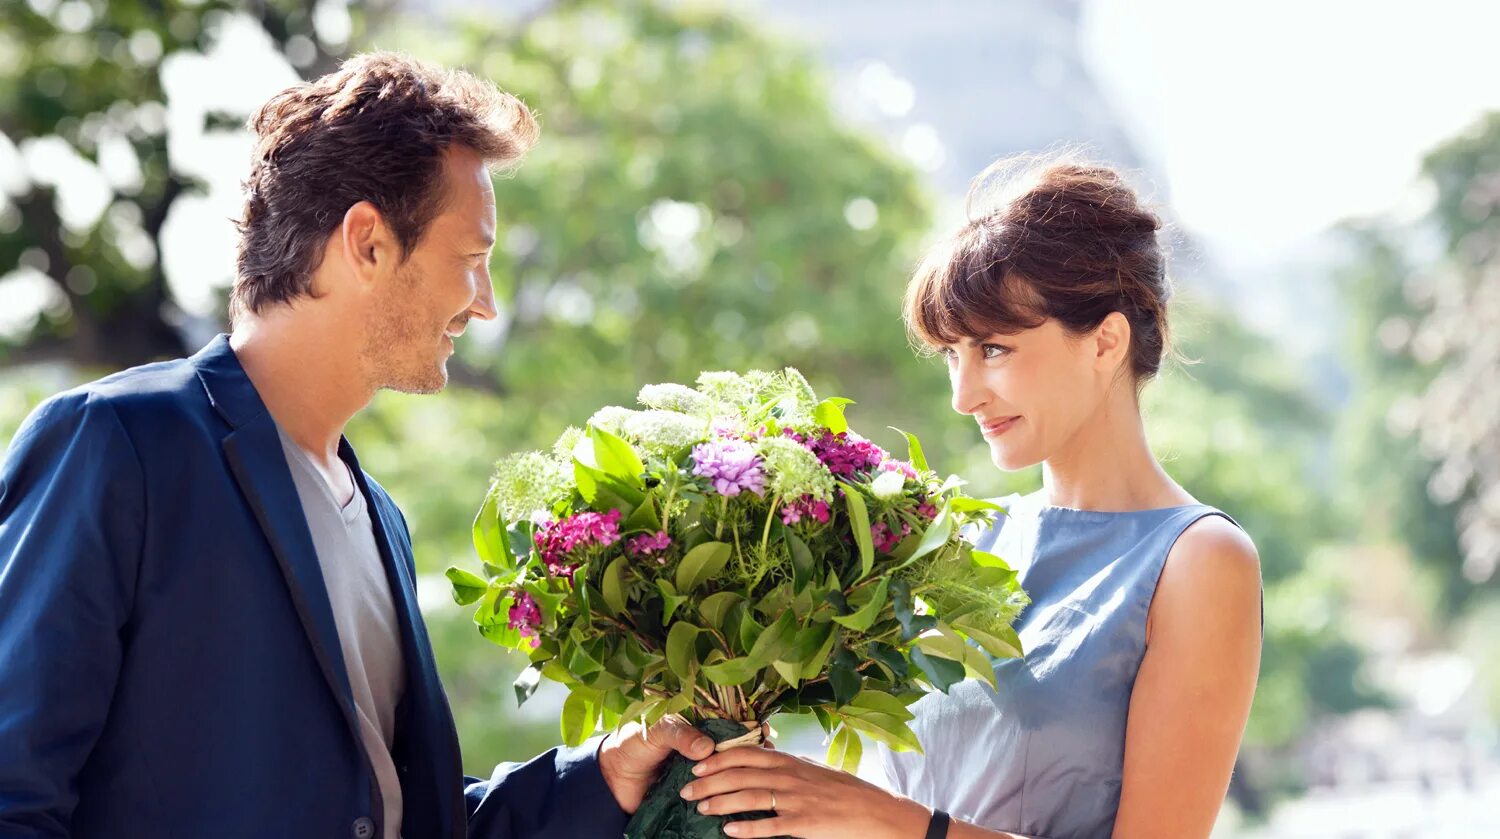 Парень дарит девушке цветы. Мужчина дарит цветы женщине. Мужчина дарит букет цветов. Парень даёт девушке цветы. Припев дарите женщинам цветы